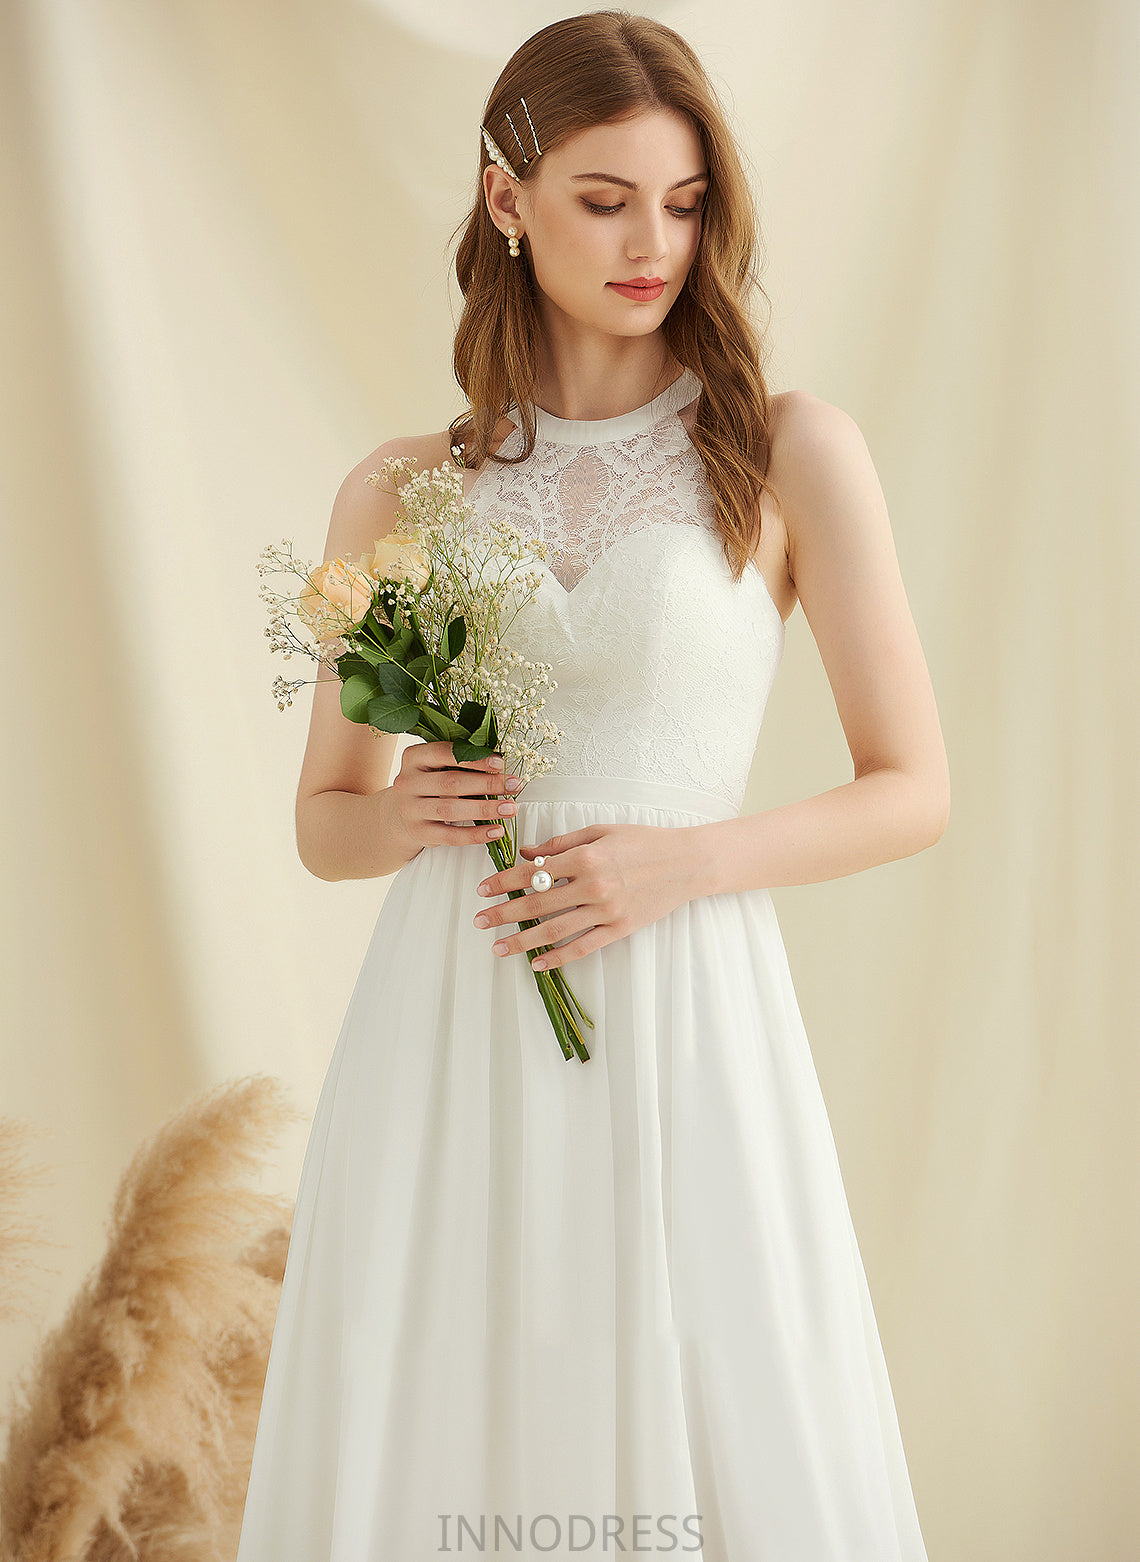 Scoop Wedding Dresses A-Line Front Samara Wedding Floor-Length Chiffon Neck Split Lace With Dress